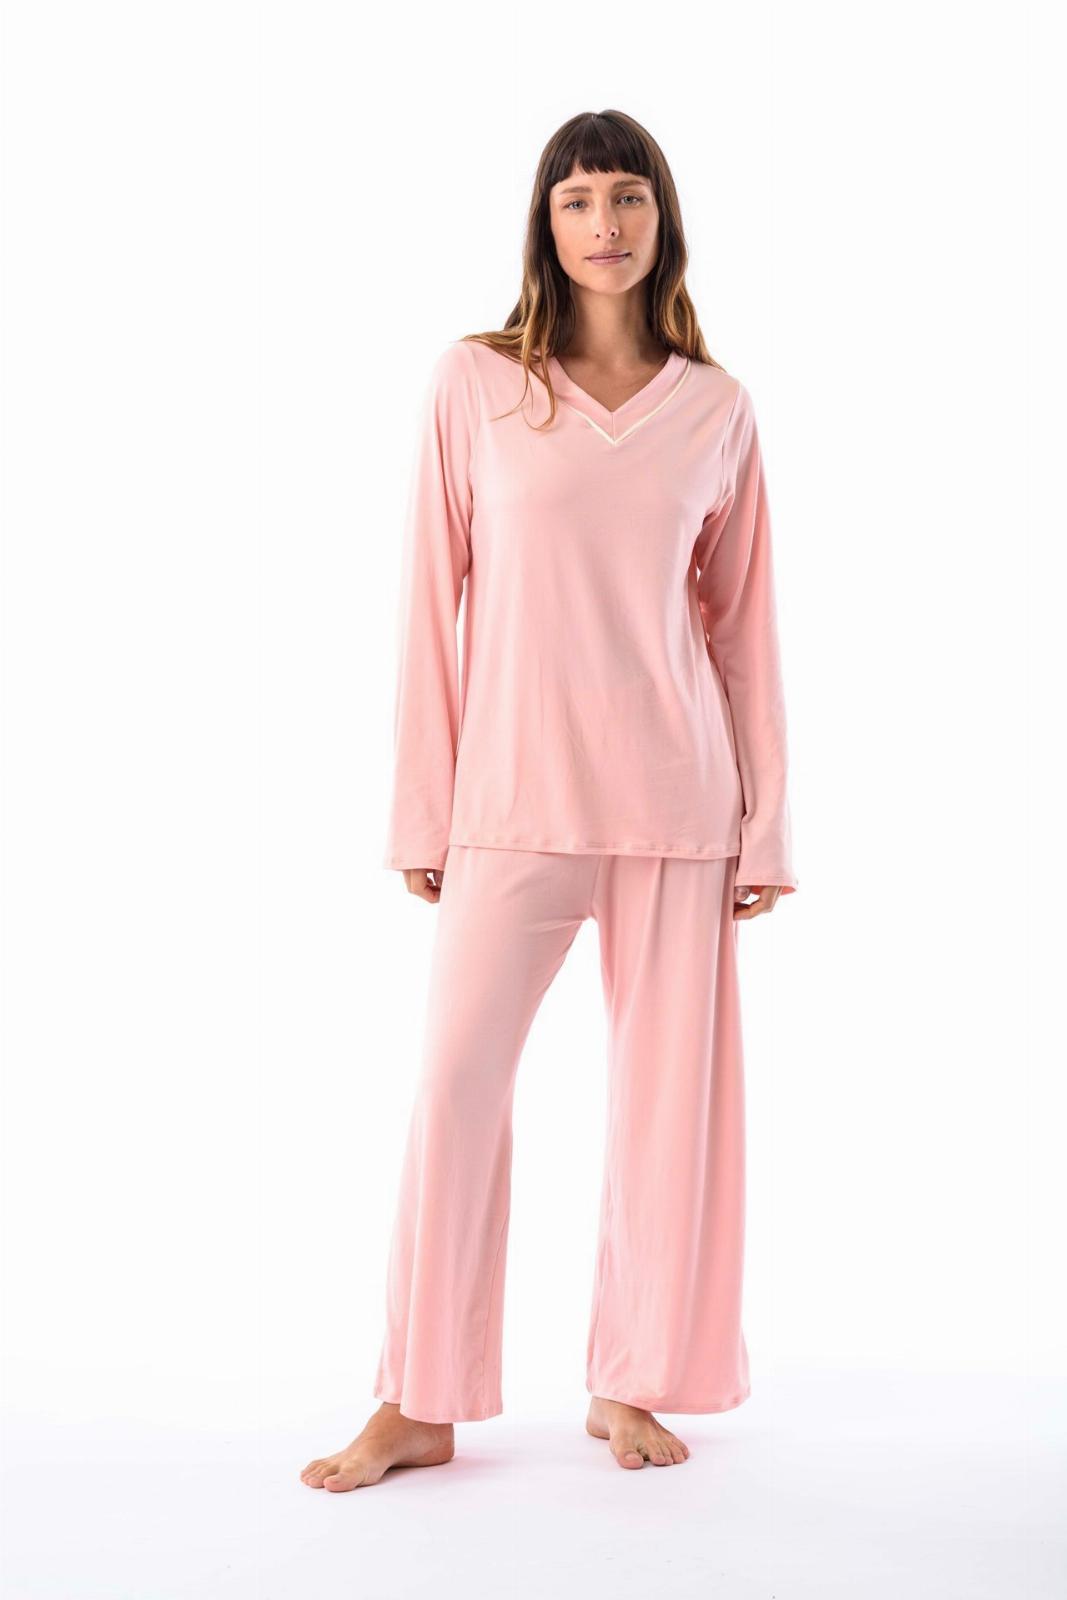 Cala - Pijama Manga Larga escote en V rosado m